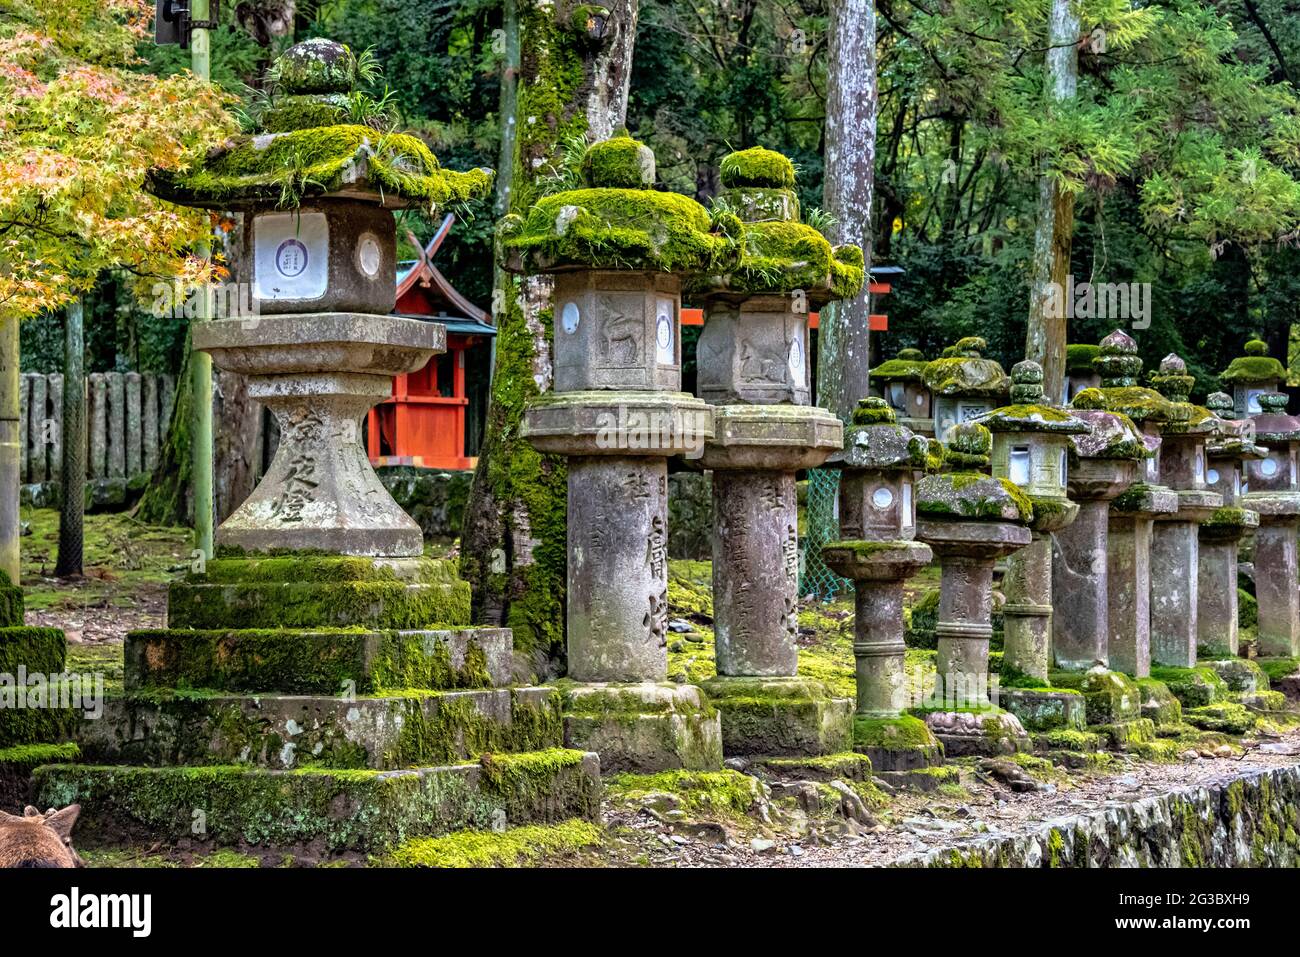 Ishidoro, stone japanese lanterns along the paths of Nara Park, Nara, Japan. Stock Photo